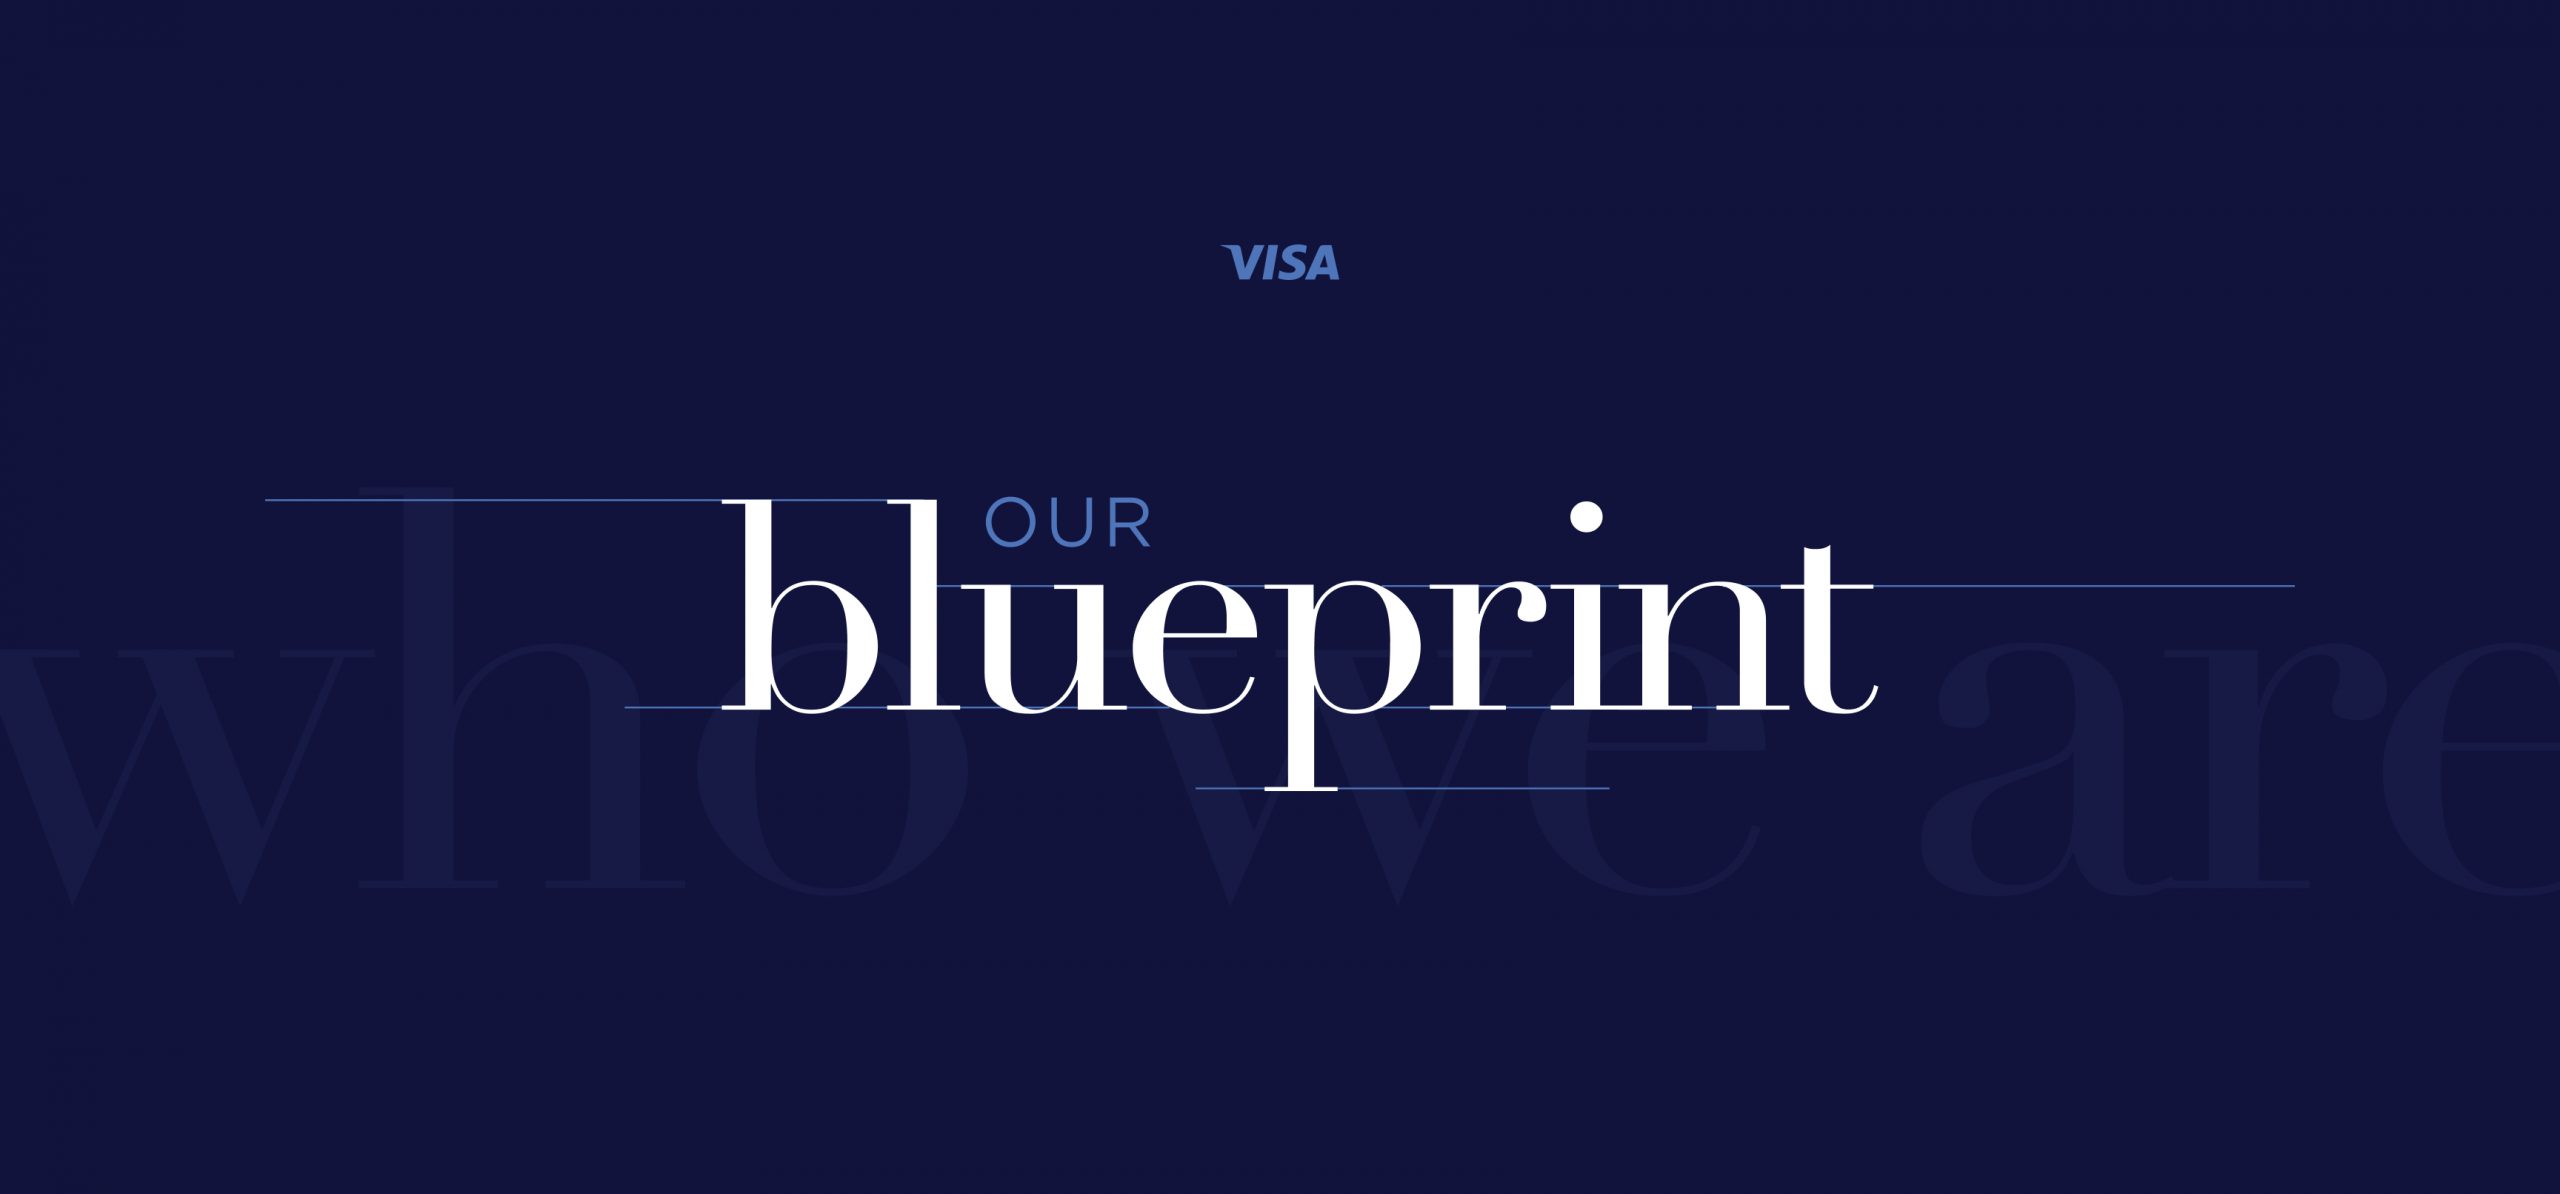 Visa Our Blueprint